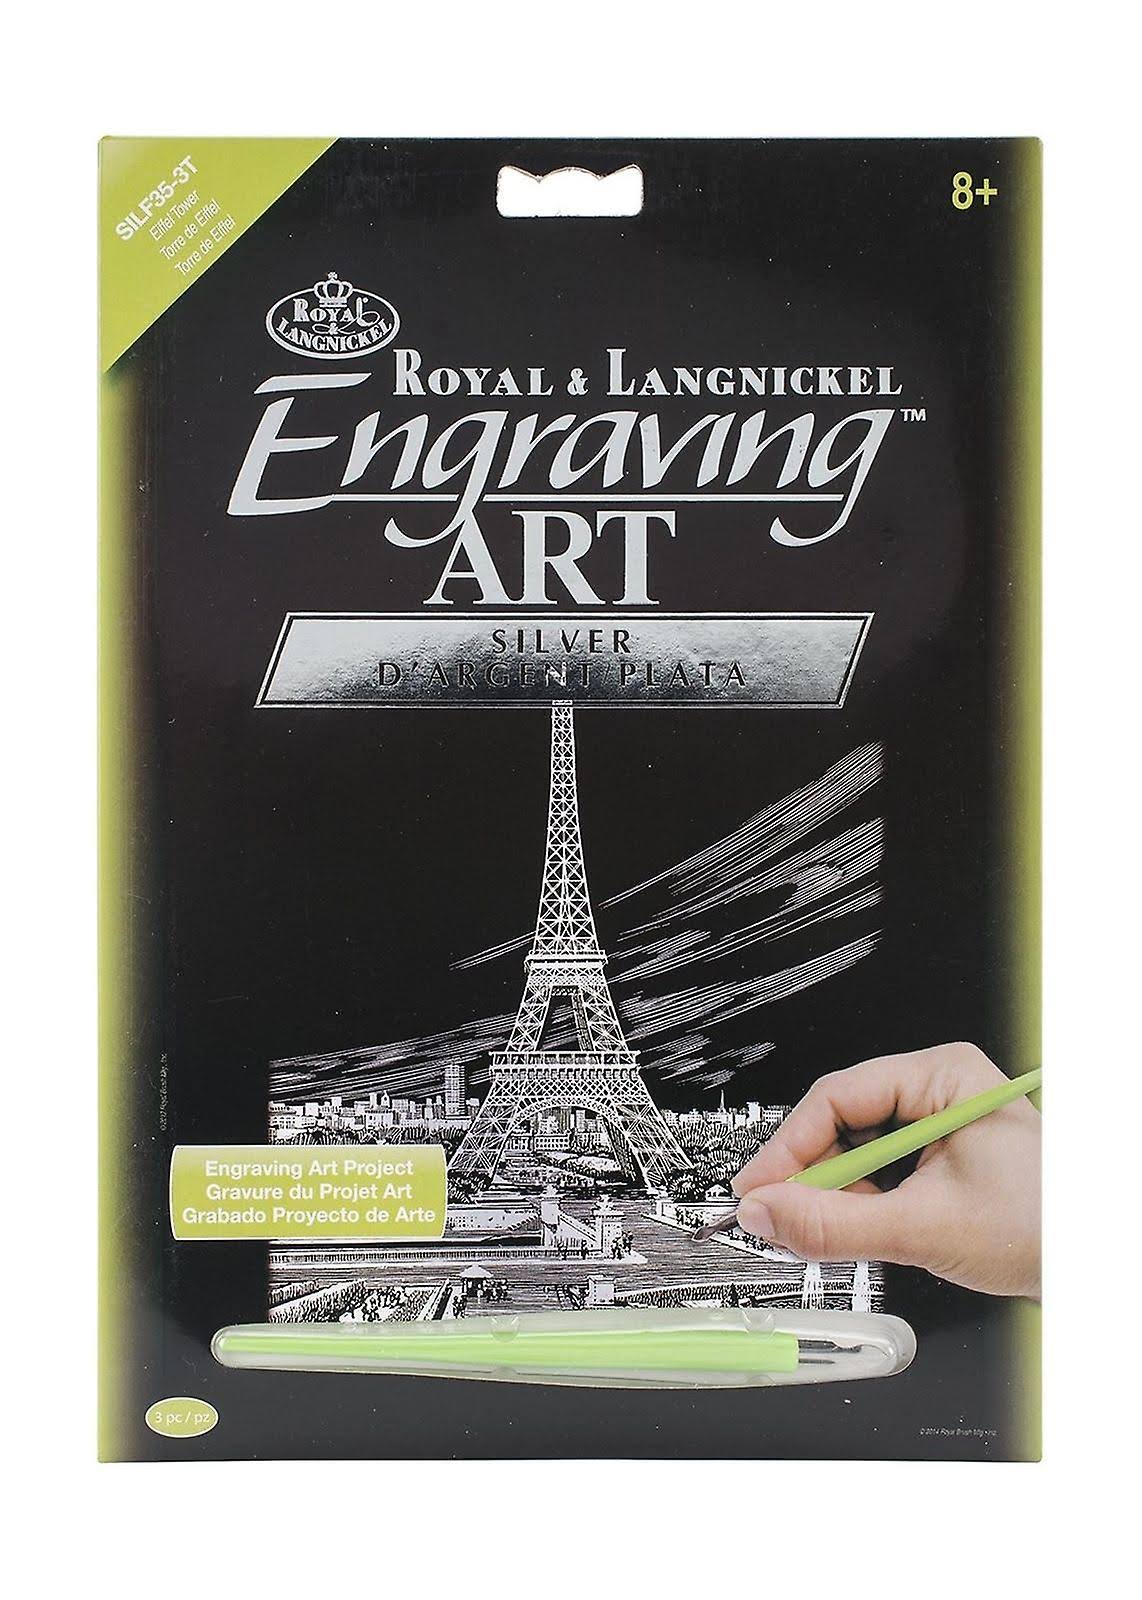 Royal & Langnickel Eiffel Tower Engraving Art Kit - Silver, 3ct